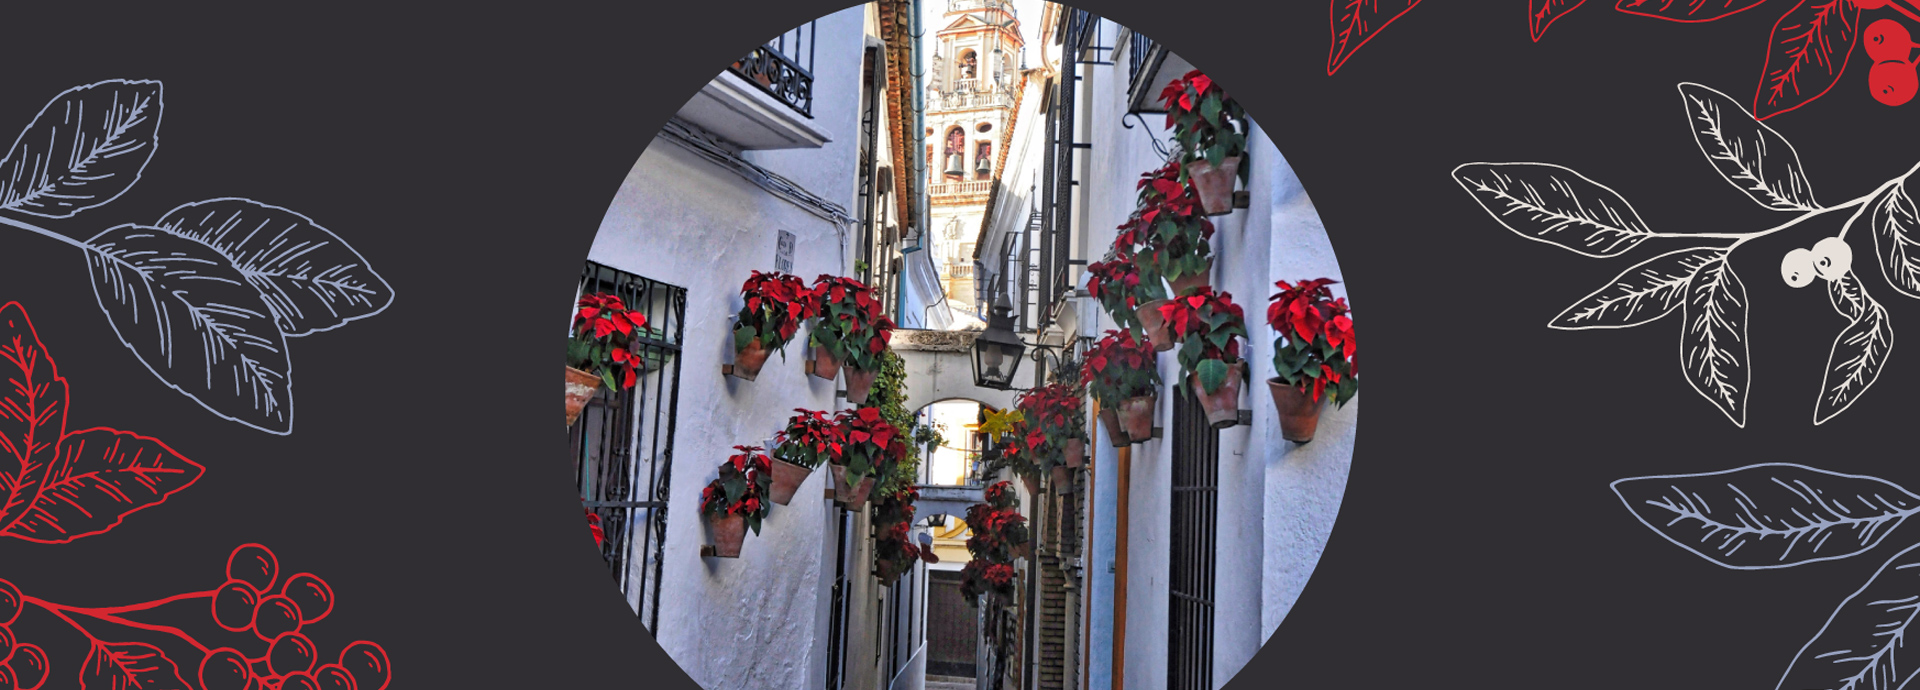 Felices Fiestas desde Córdoba